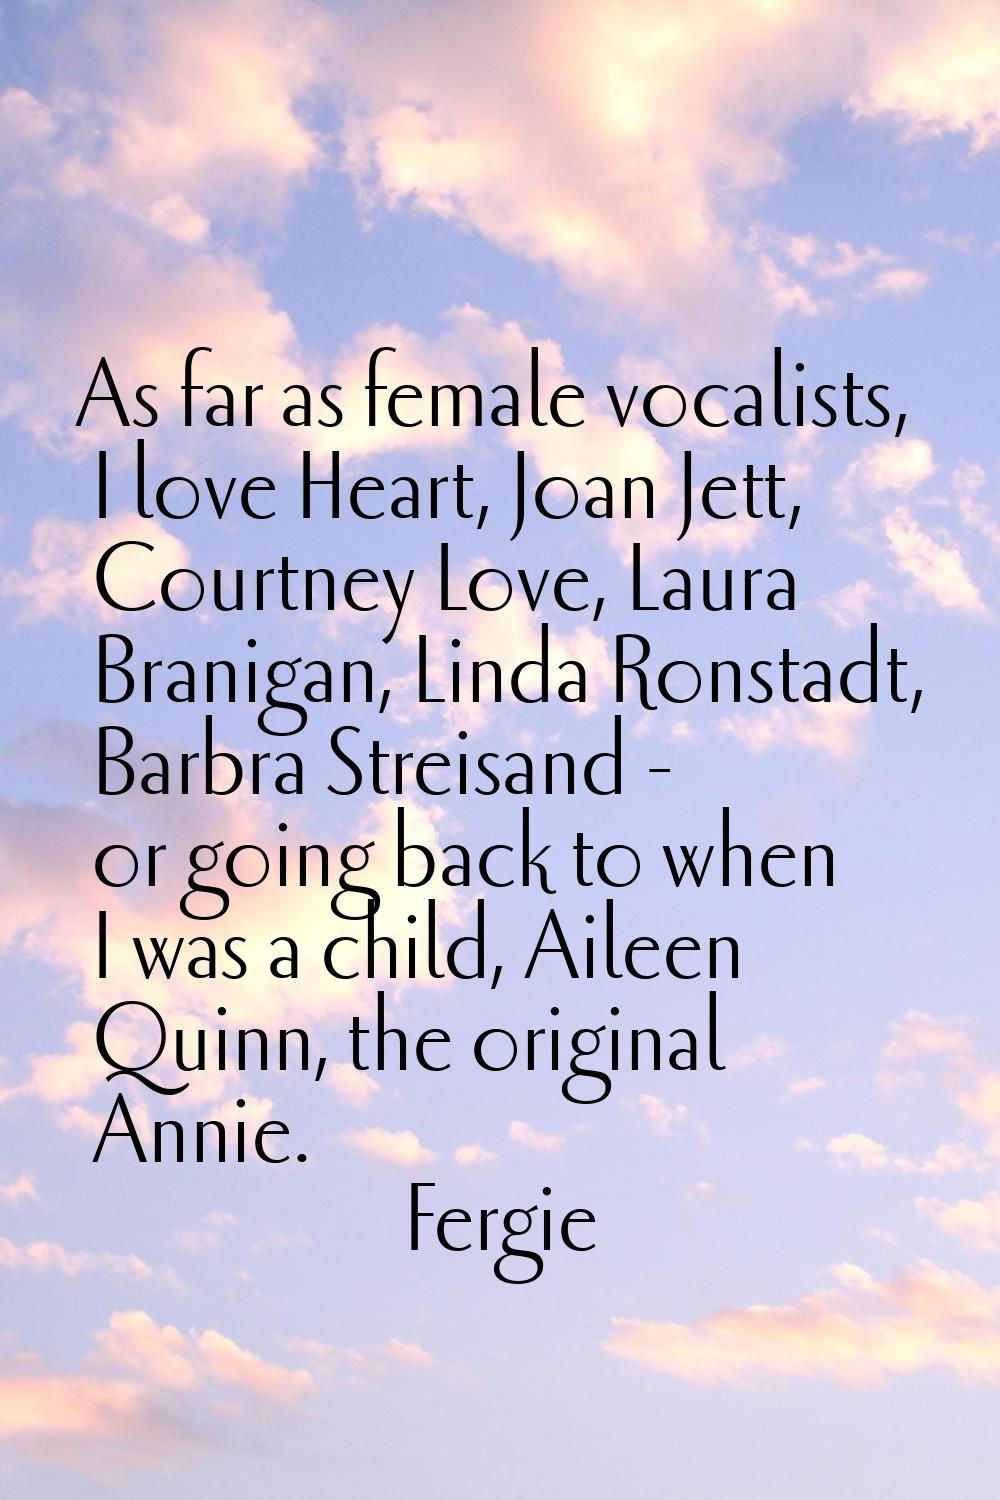 As far as female vocalists, I love Heart, Joan Jett, Courtney Love, Laura Branigan, Linda Ronstadt,